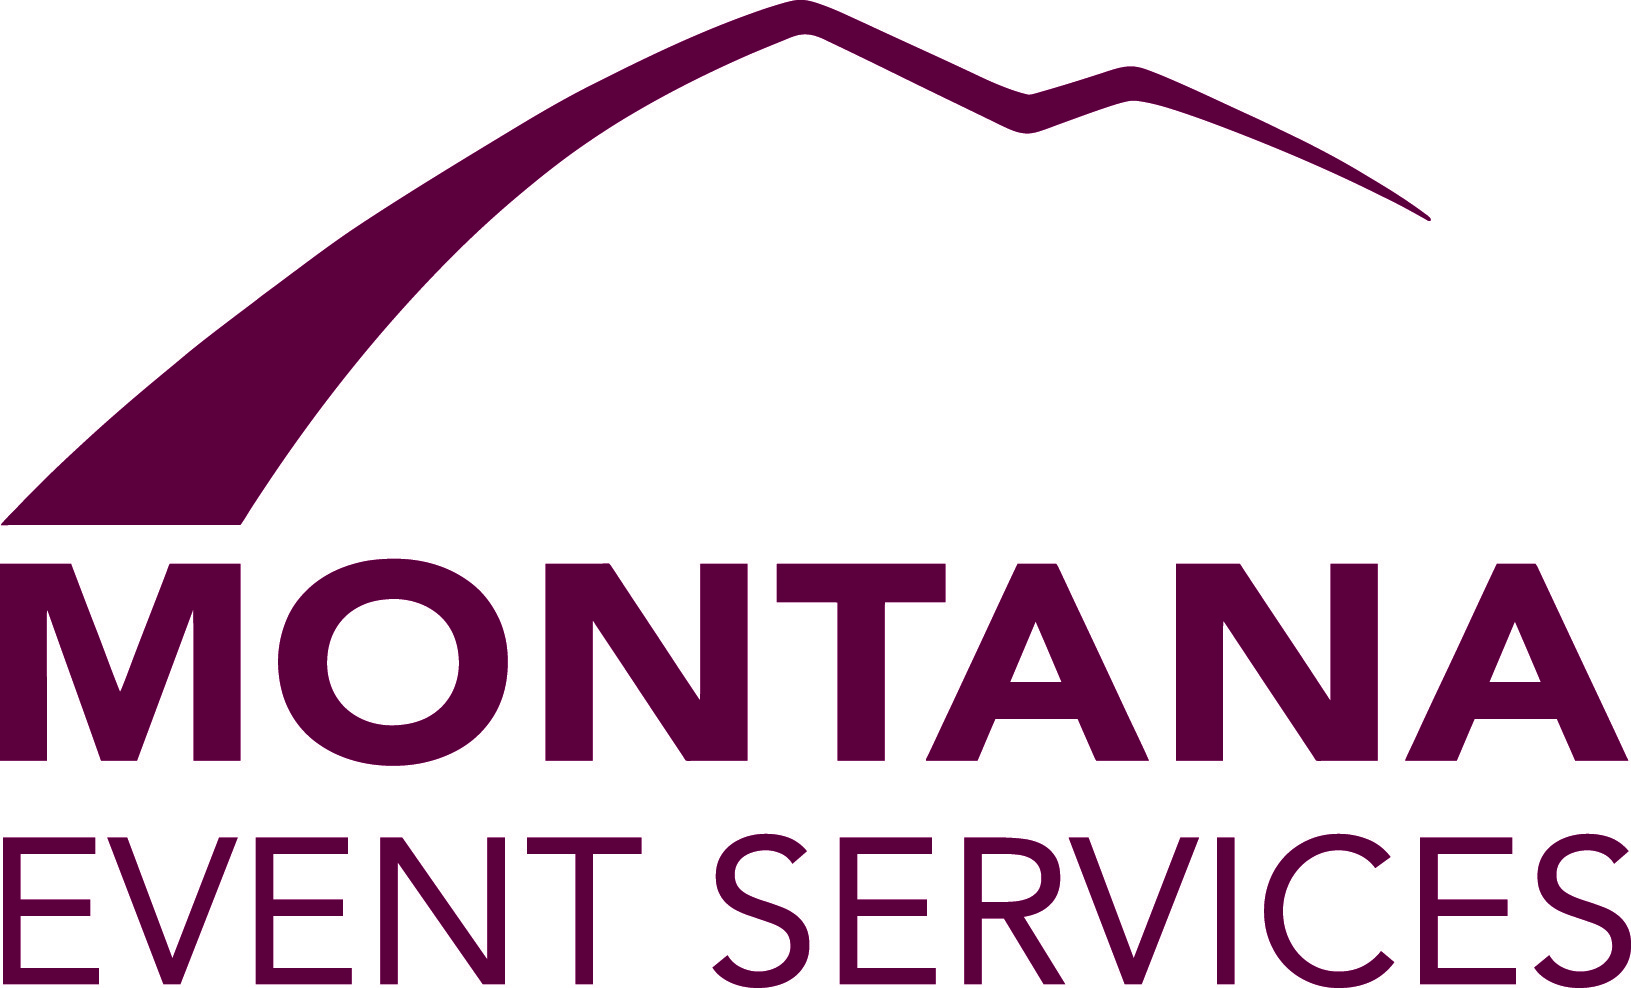 Event Services logo